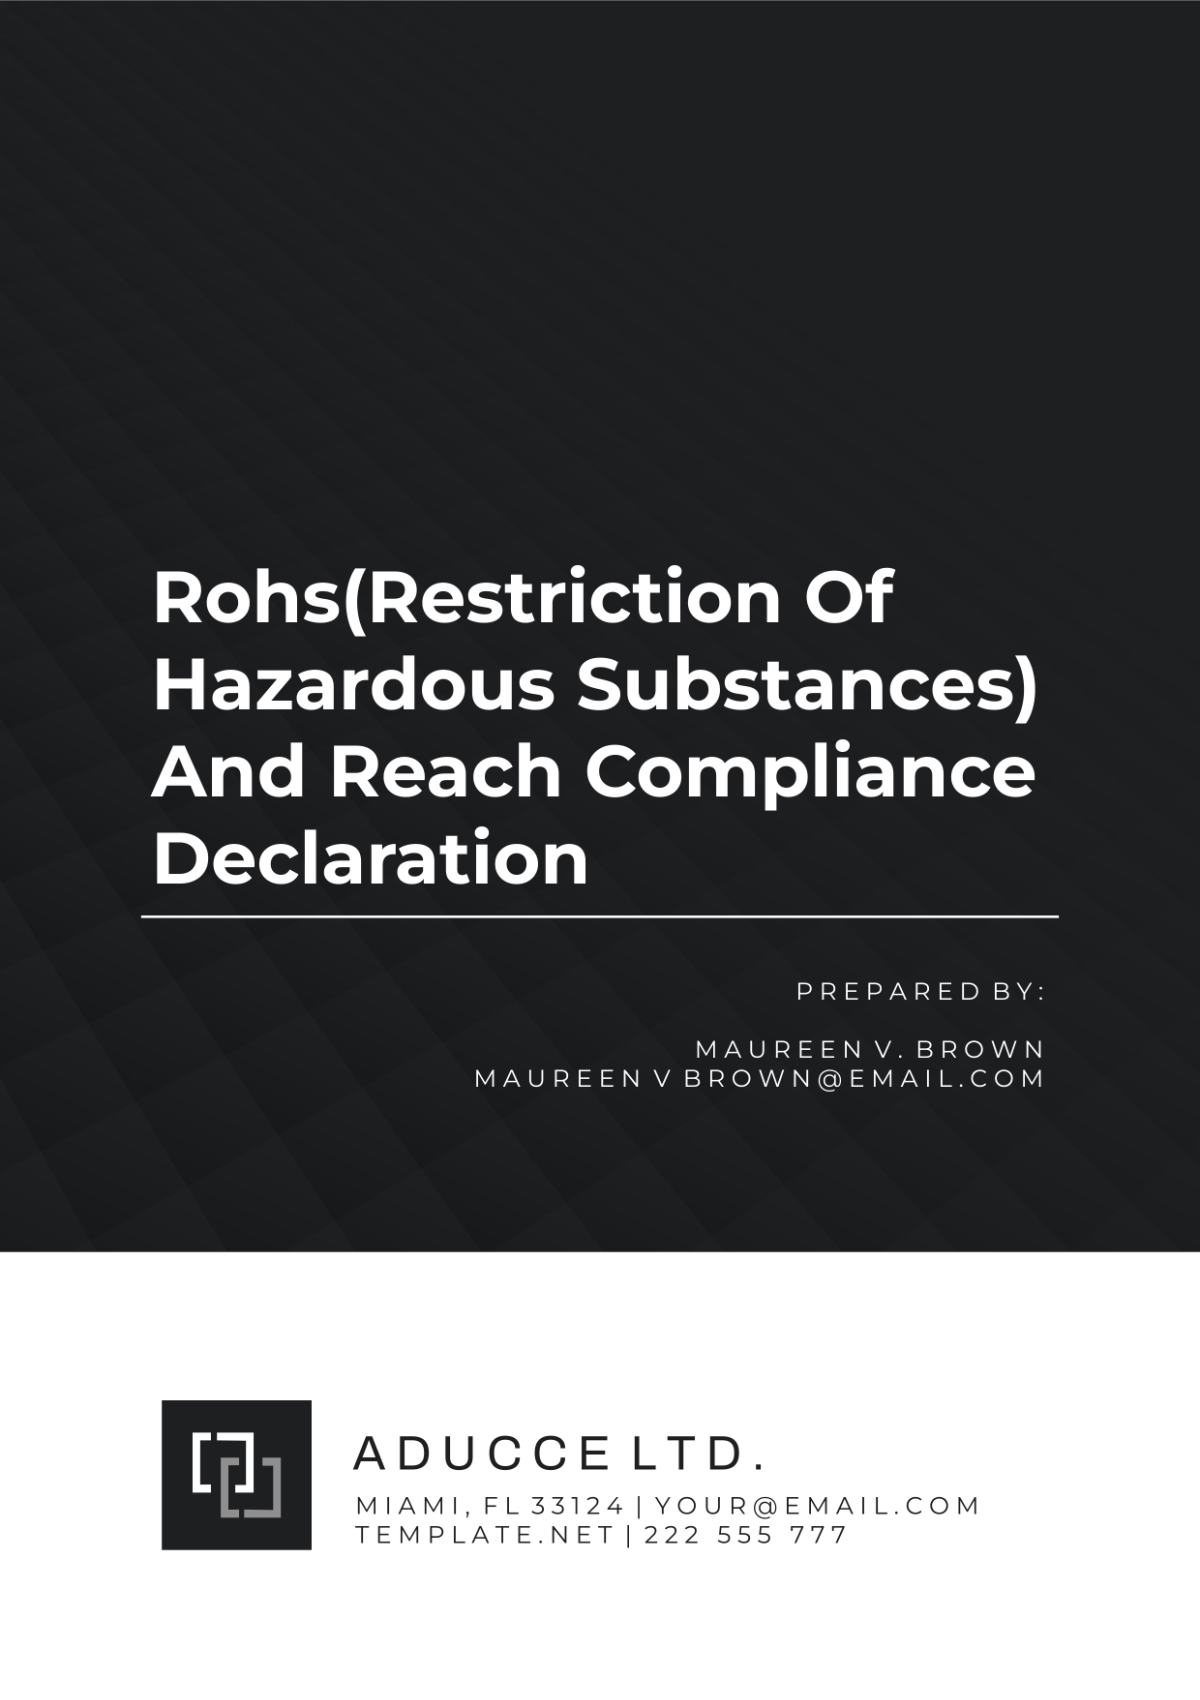 Rohs(Restriction Of Hazardous Substances) And Reach Compliance Declaration Template